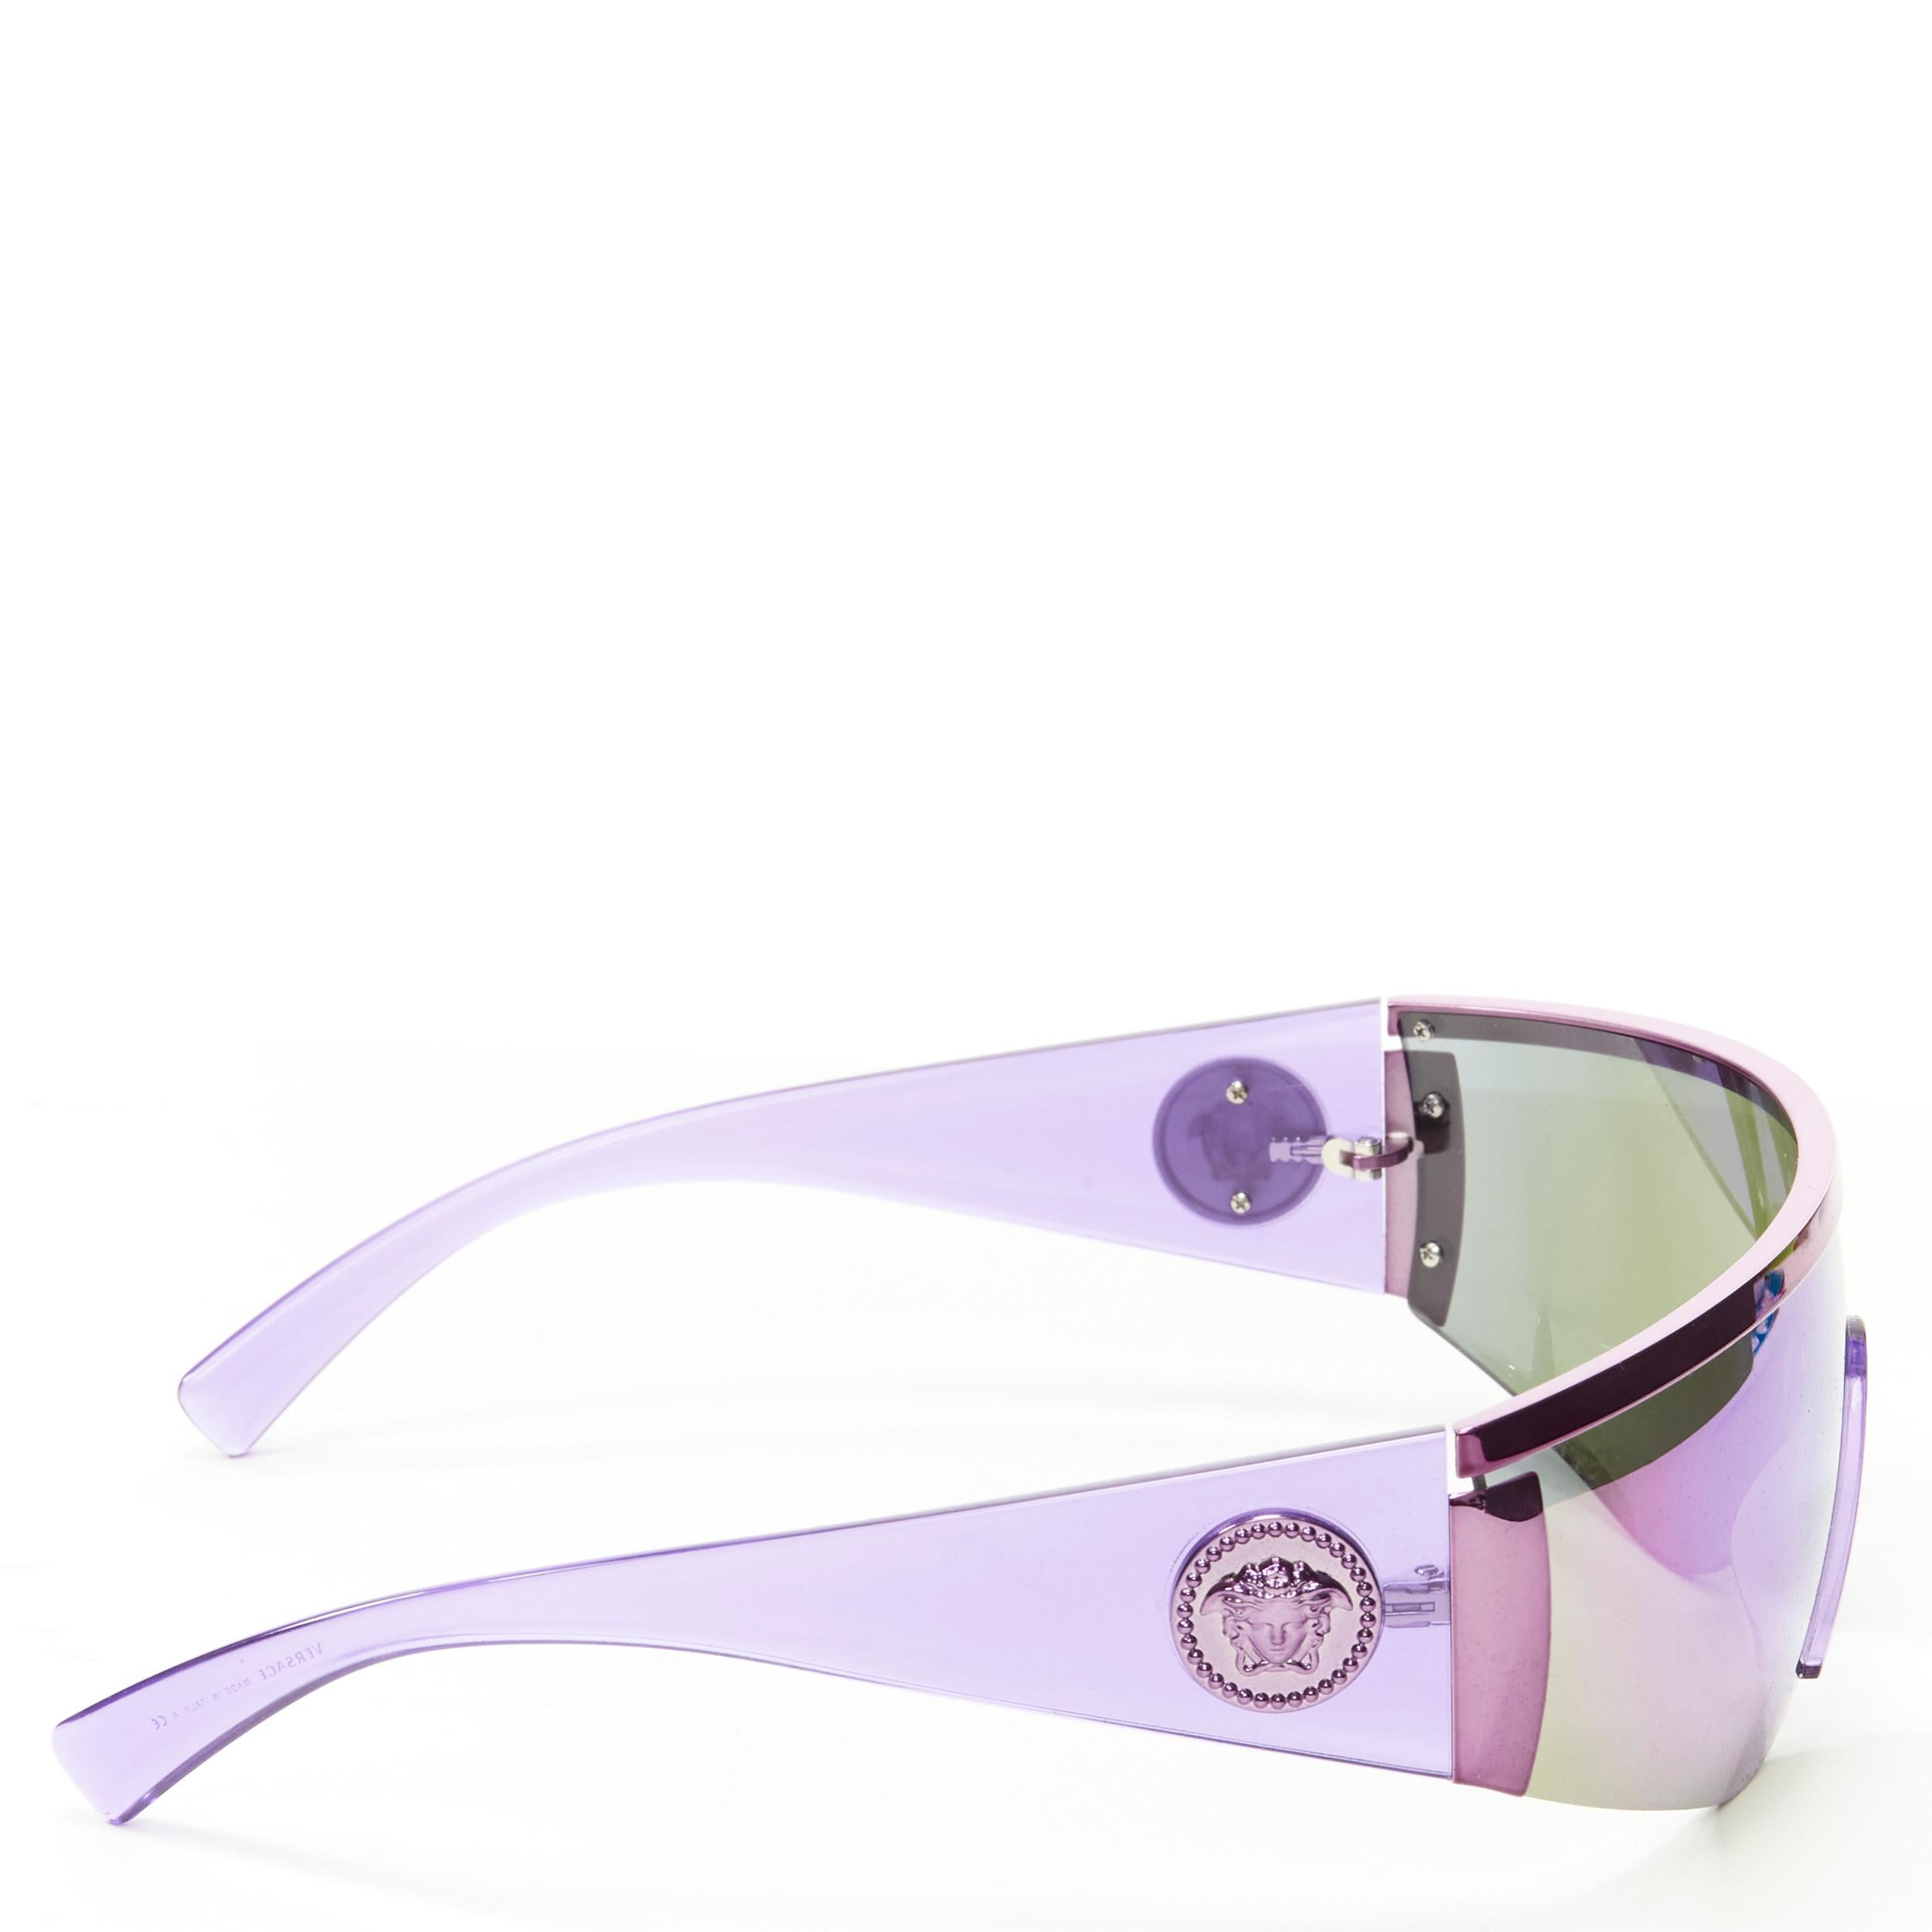 Blue new VERSACE 2018 Tribute VE2197 Medusa purple blue mirrored shield sunglasses